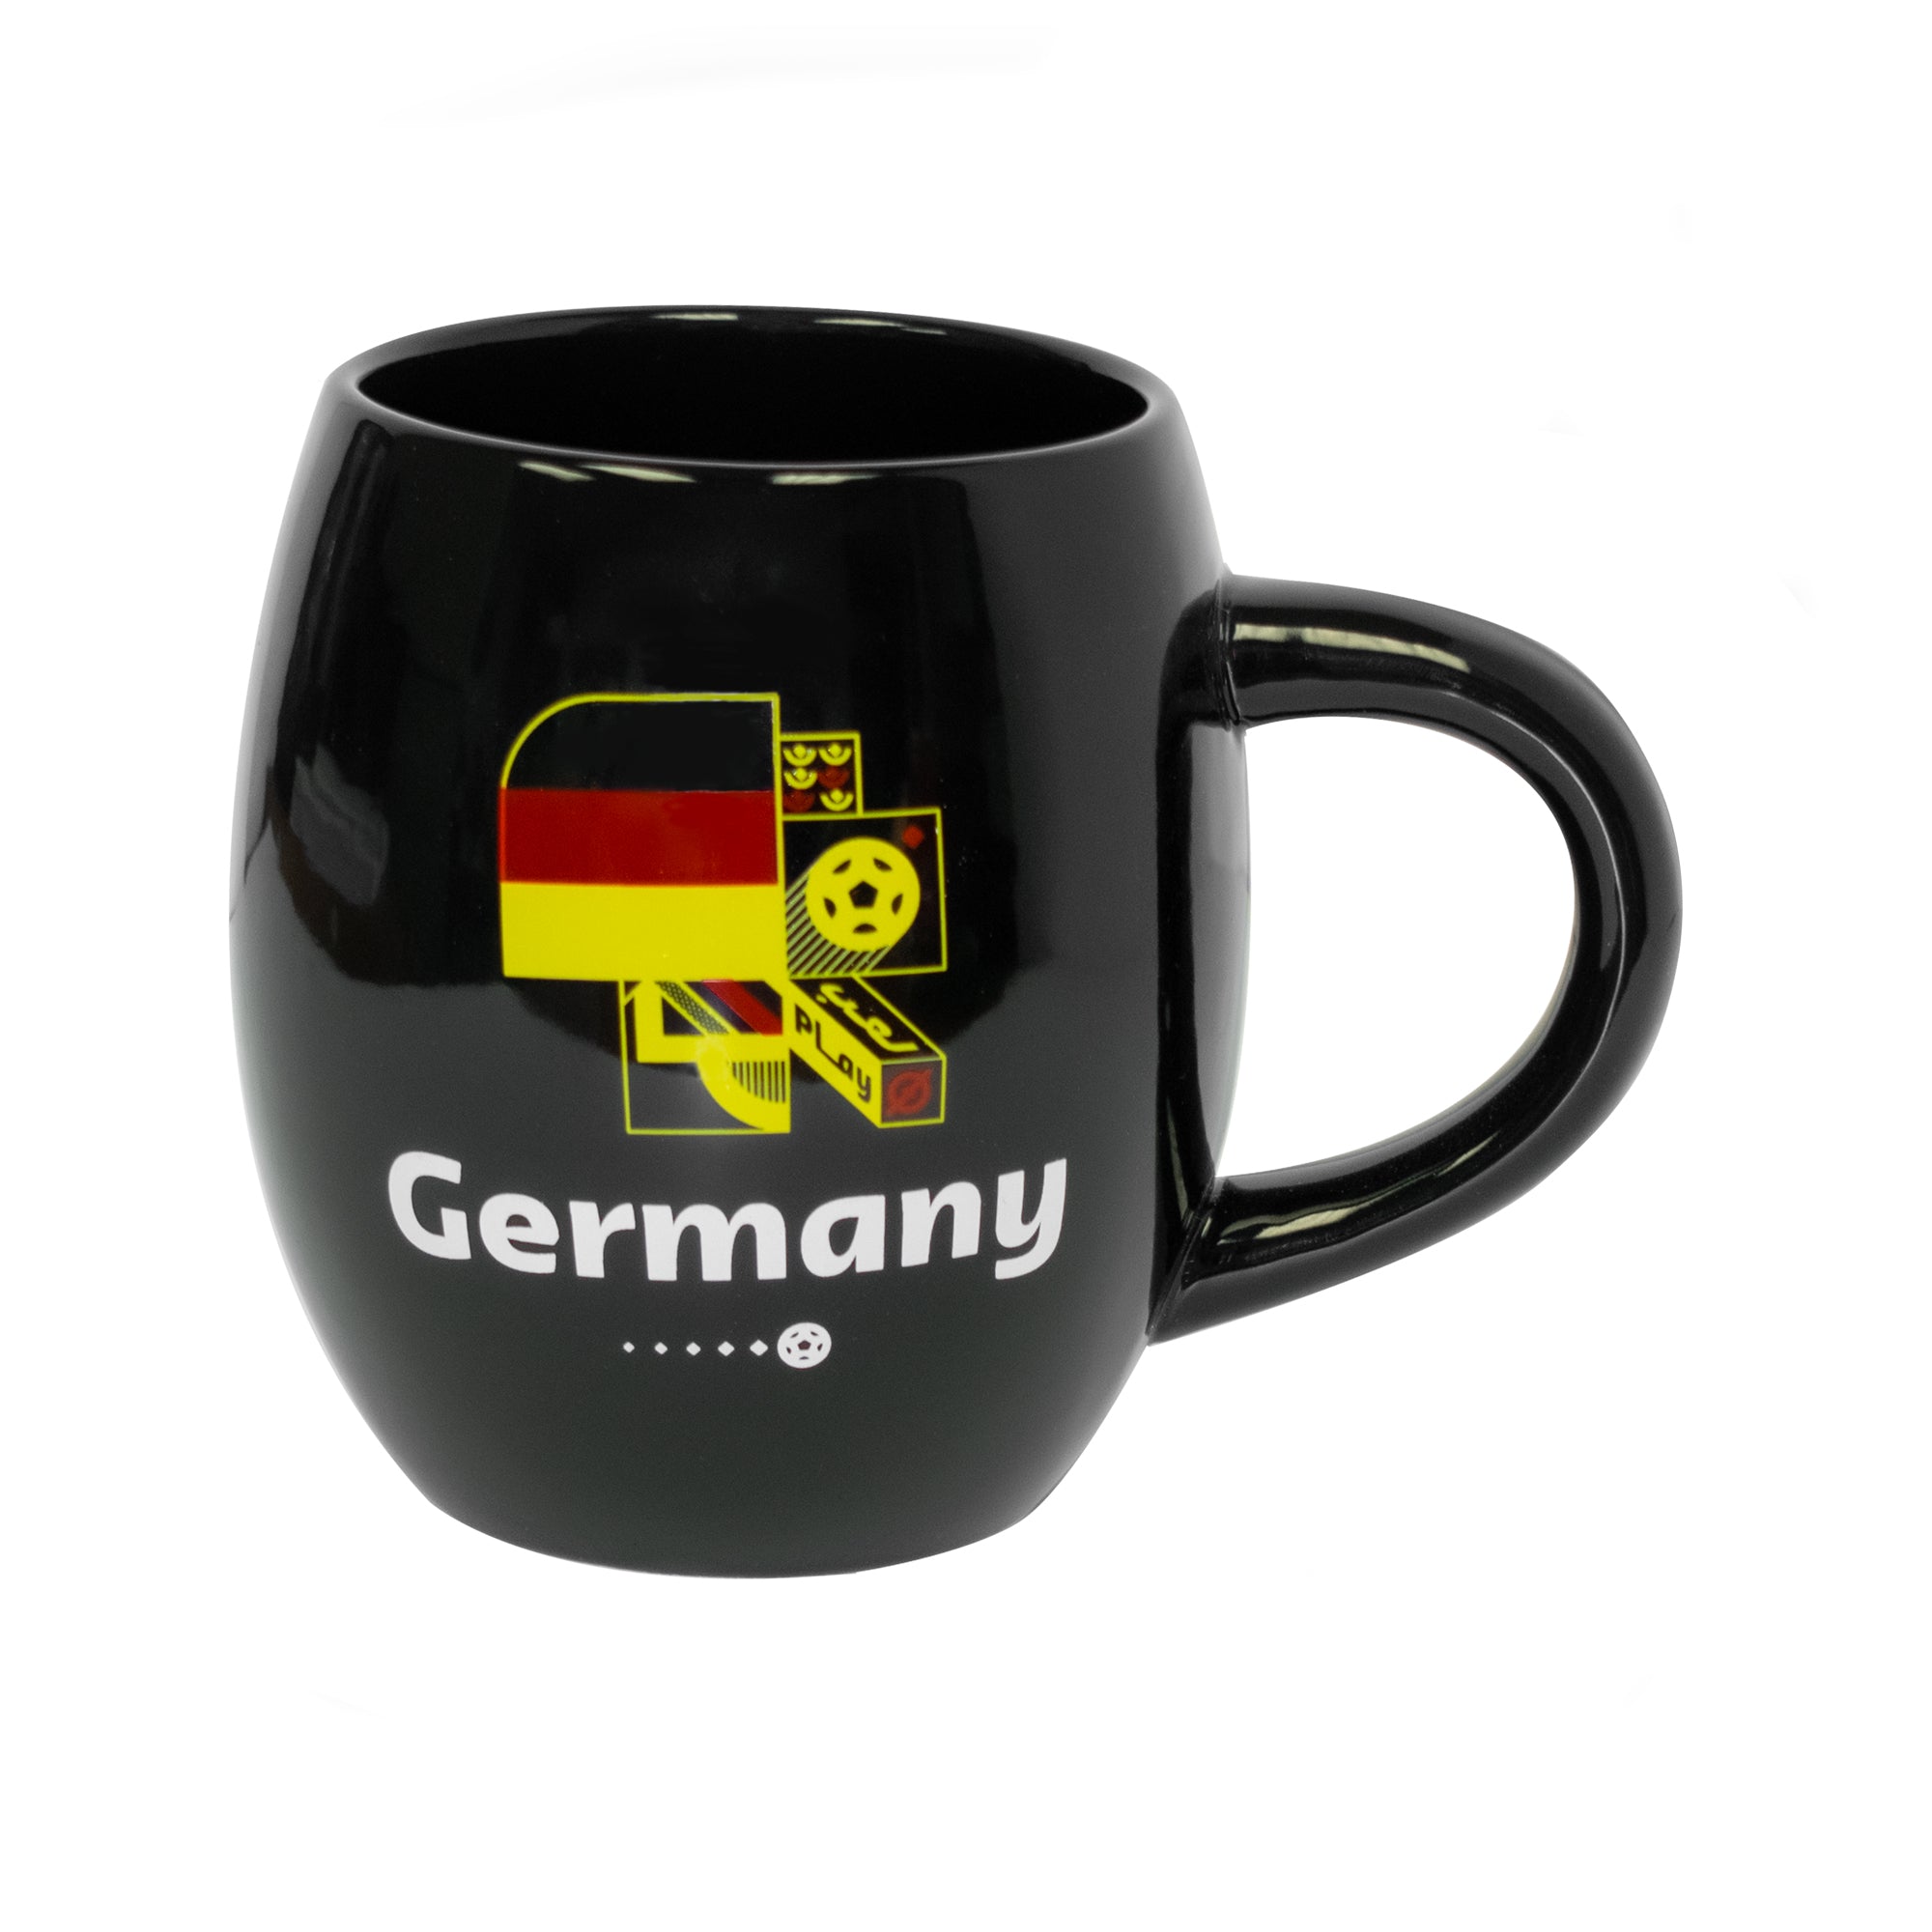 mug-germany-front-worldcup-productimage.jpg